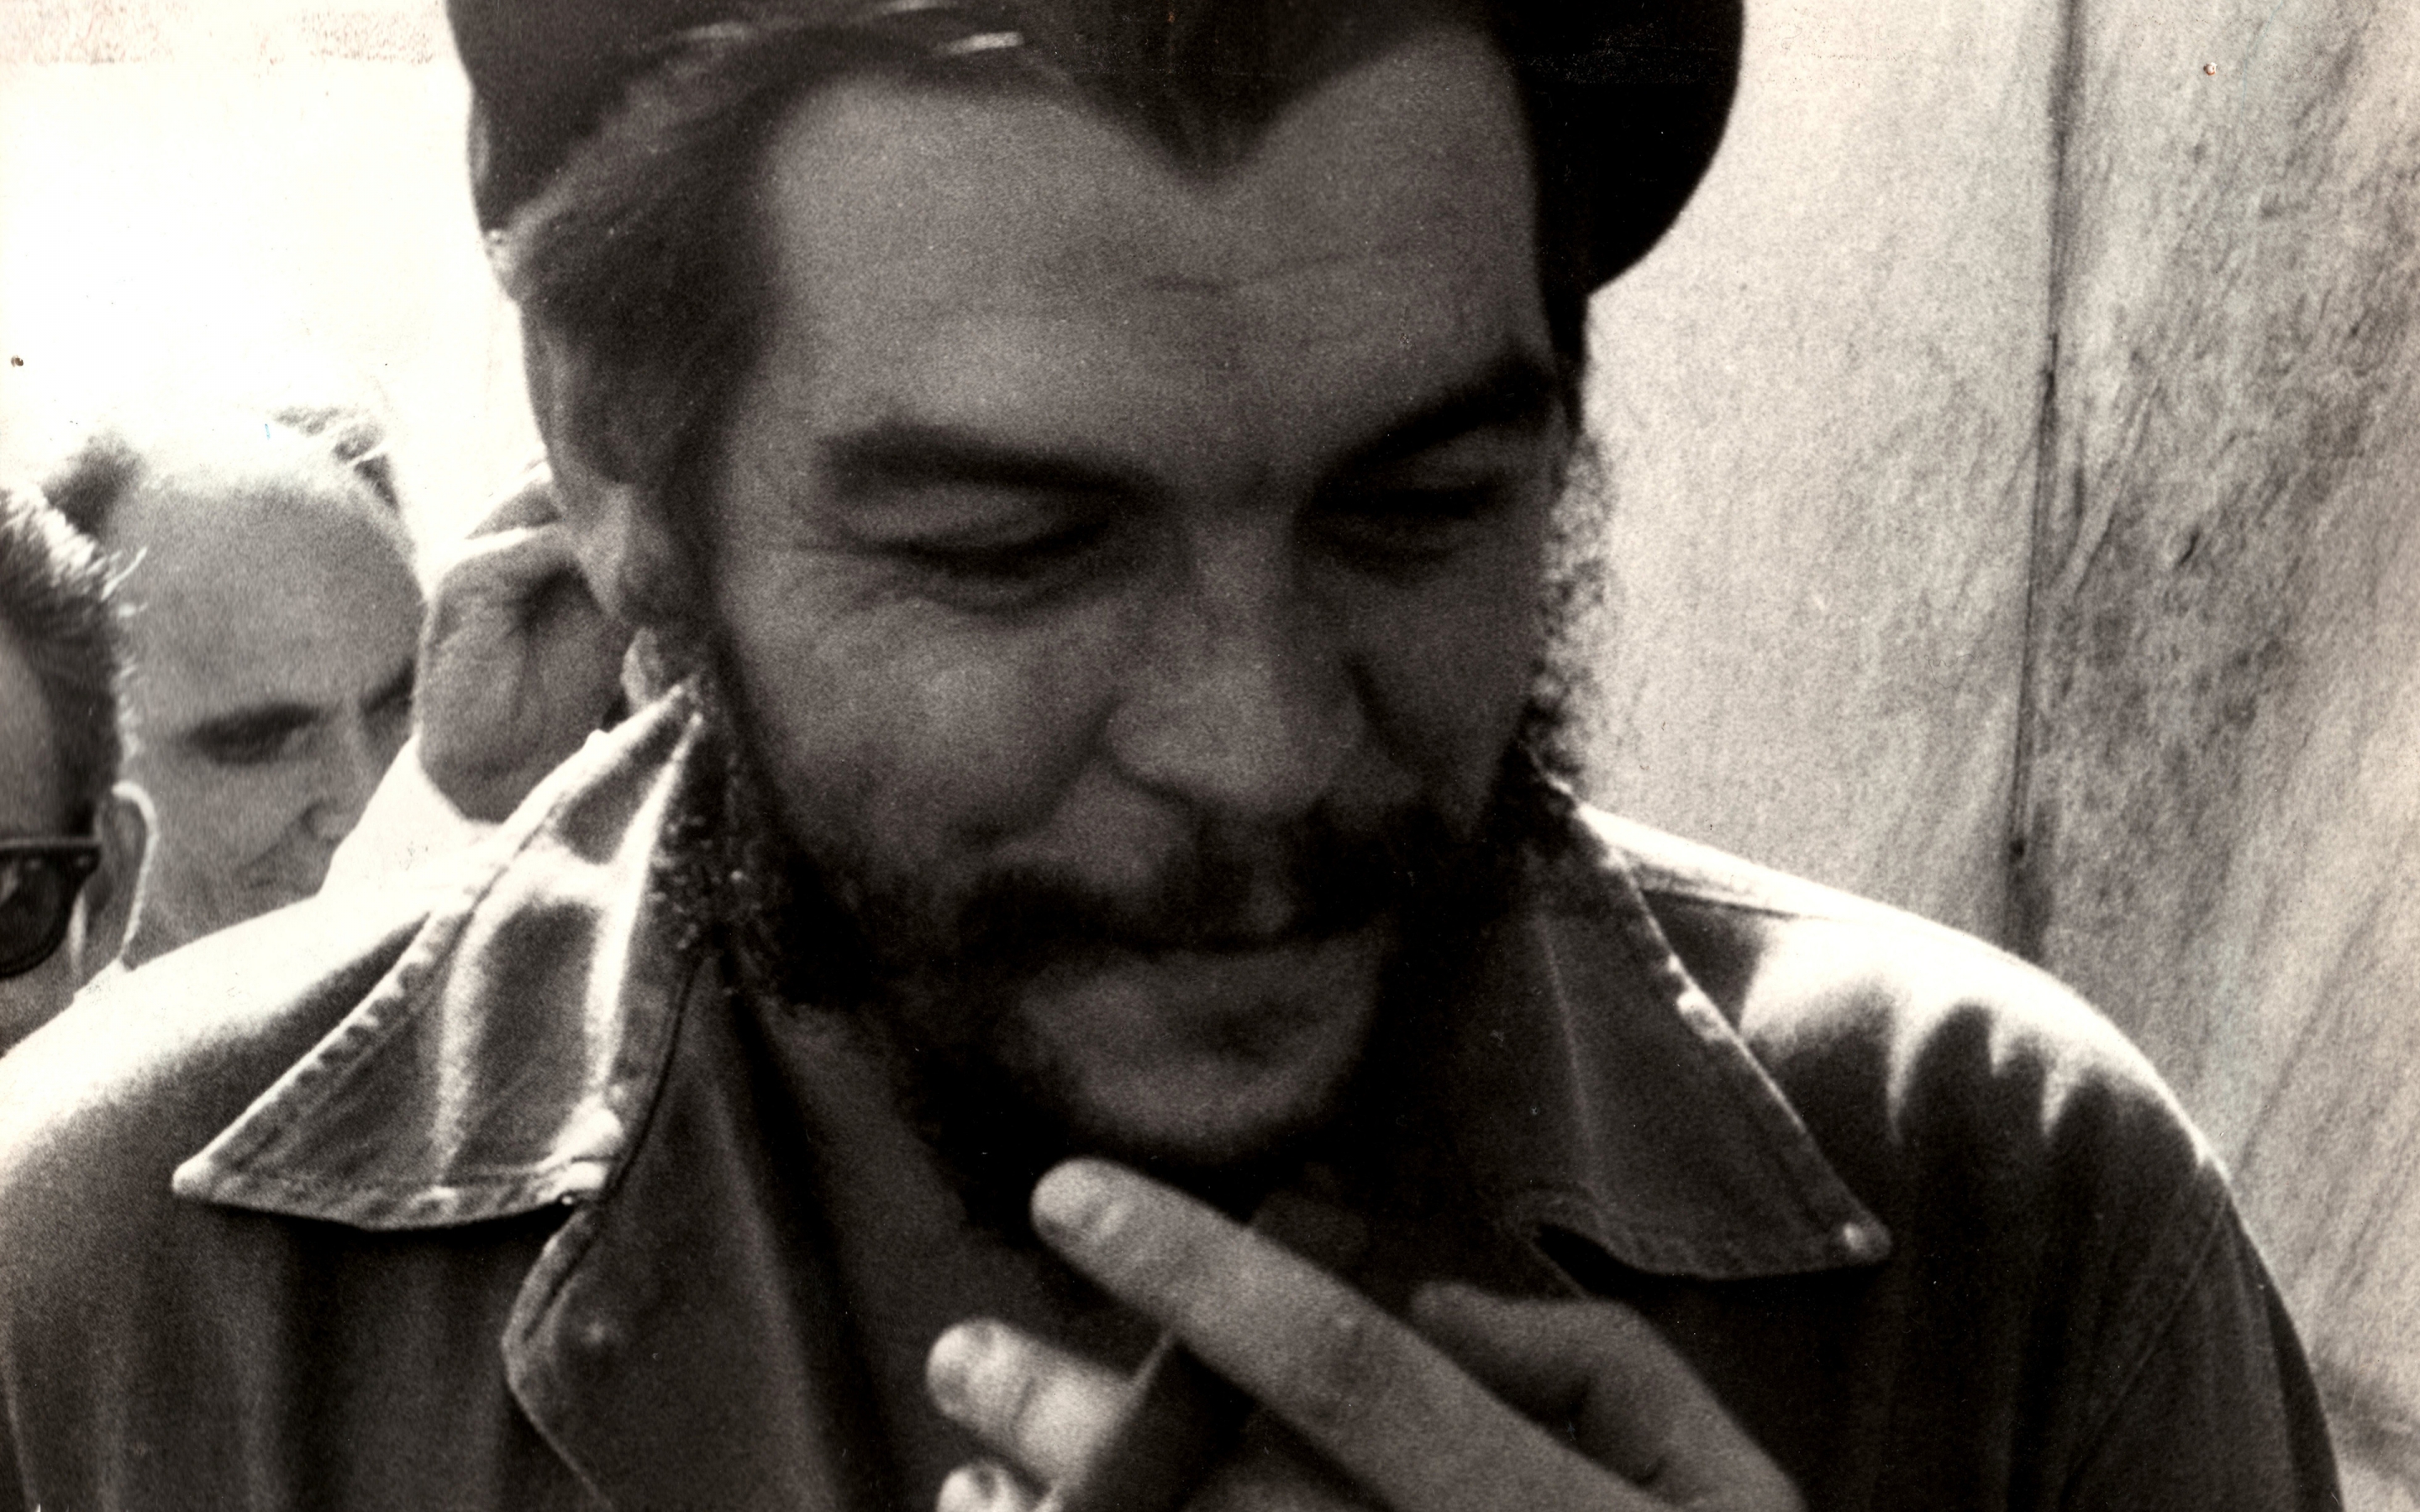 Che Guevara Smiling for 2880 x 1800 Retina Display resolution